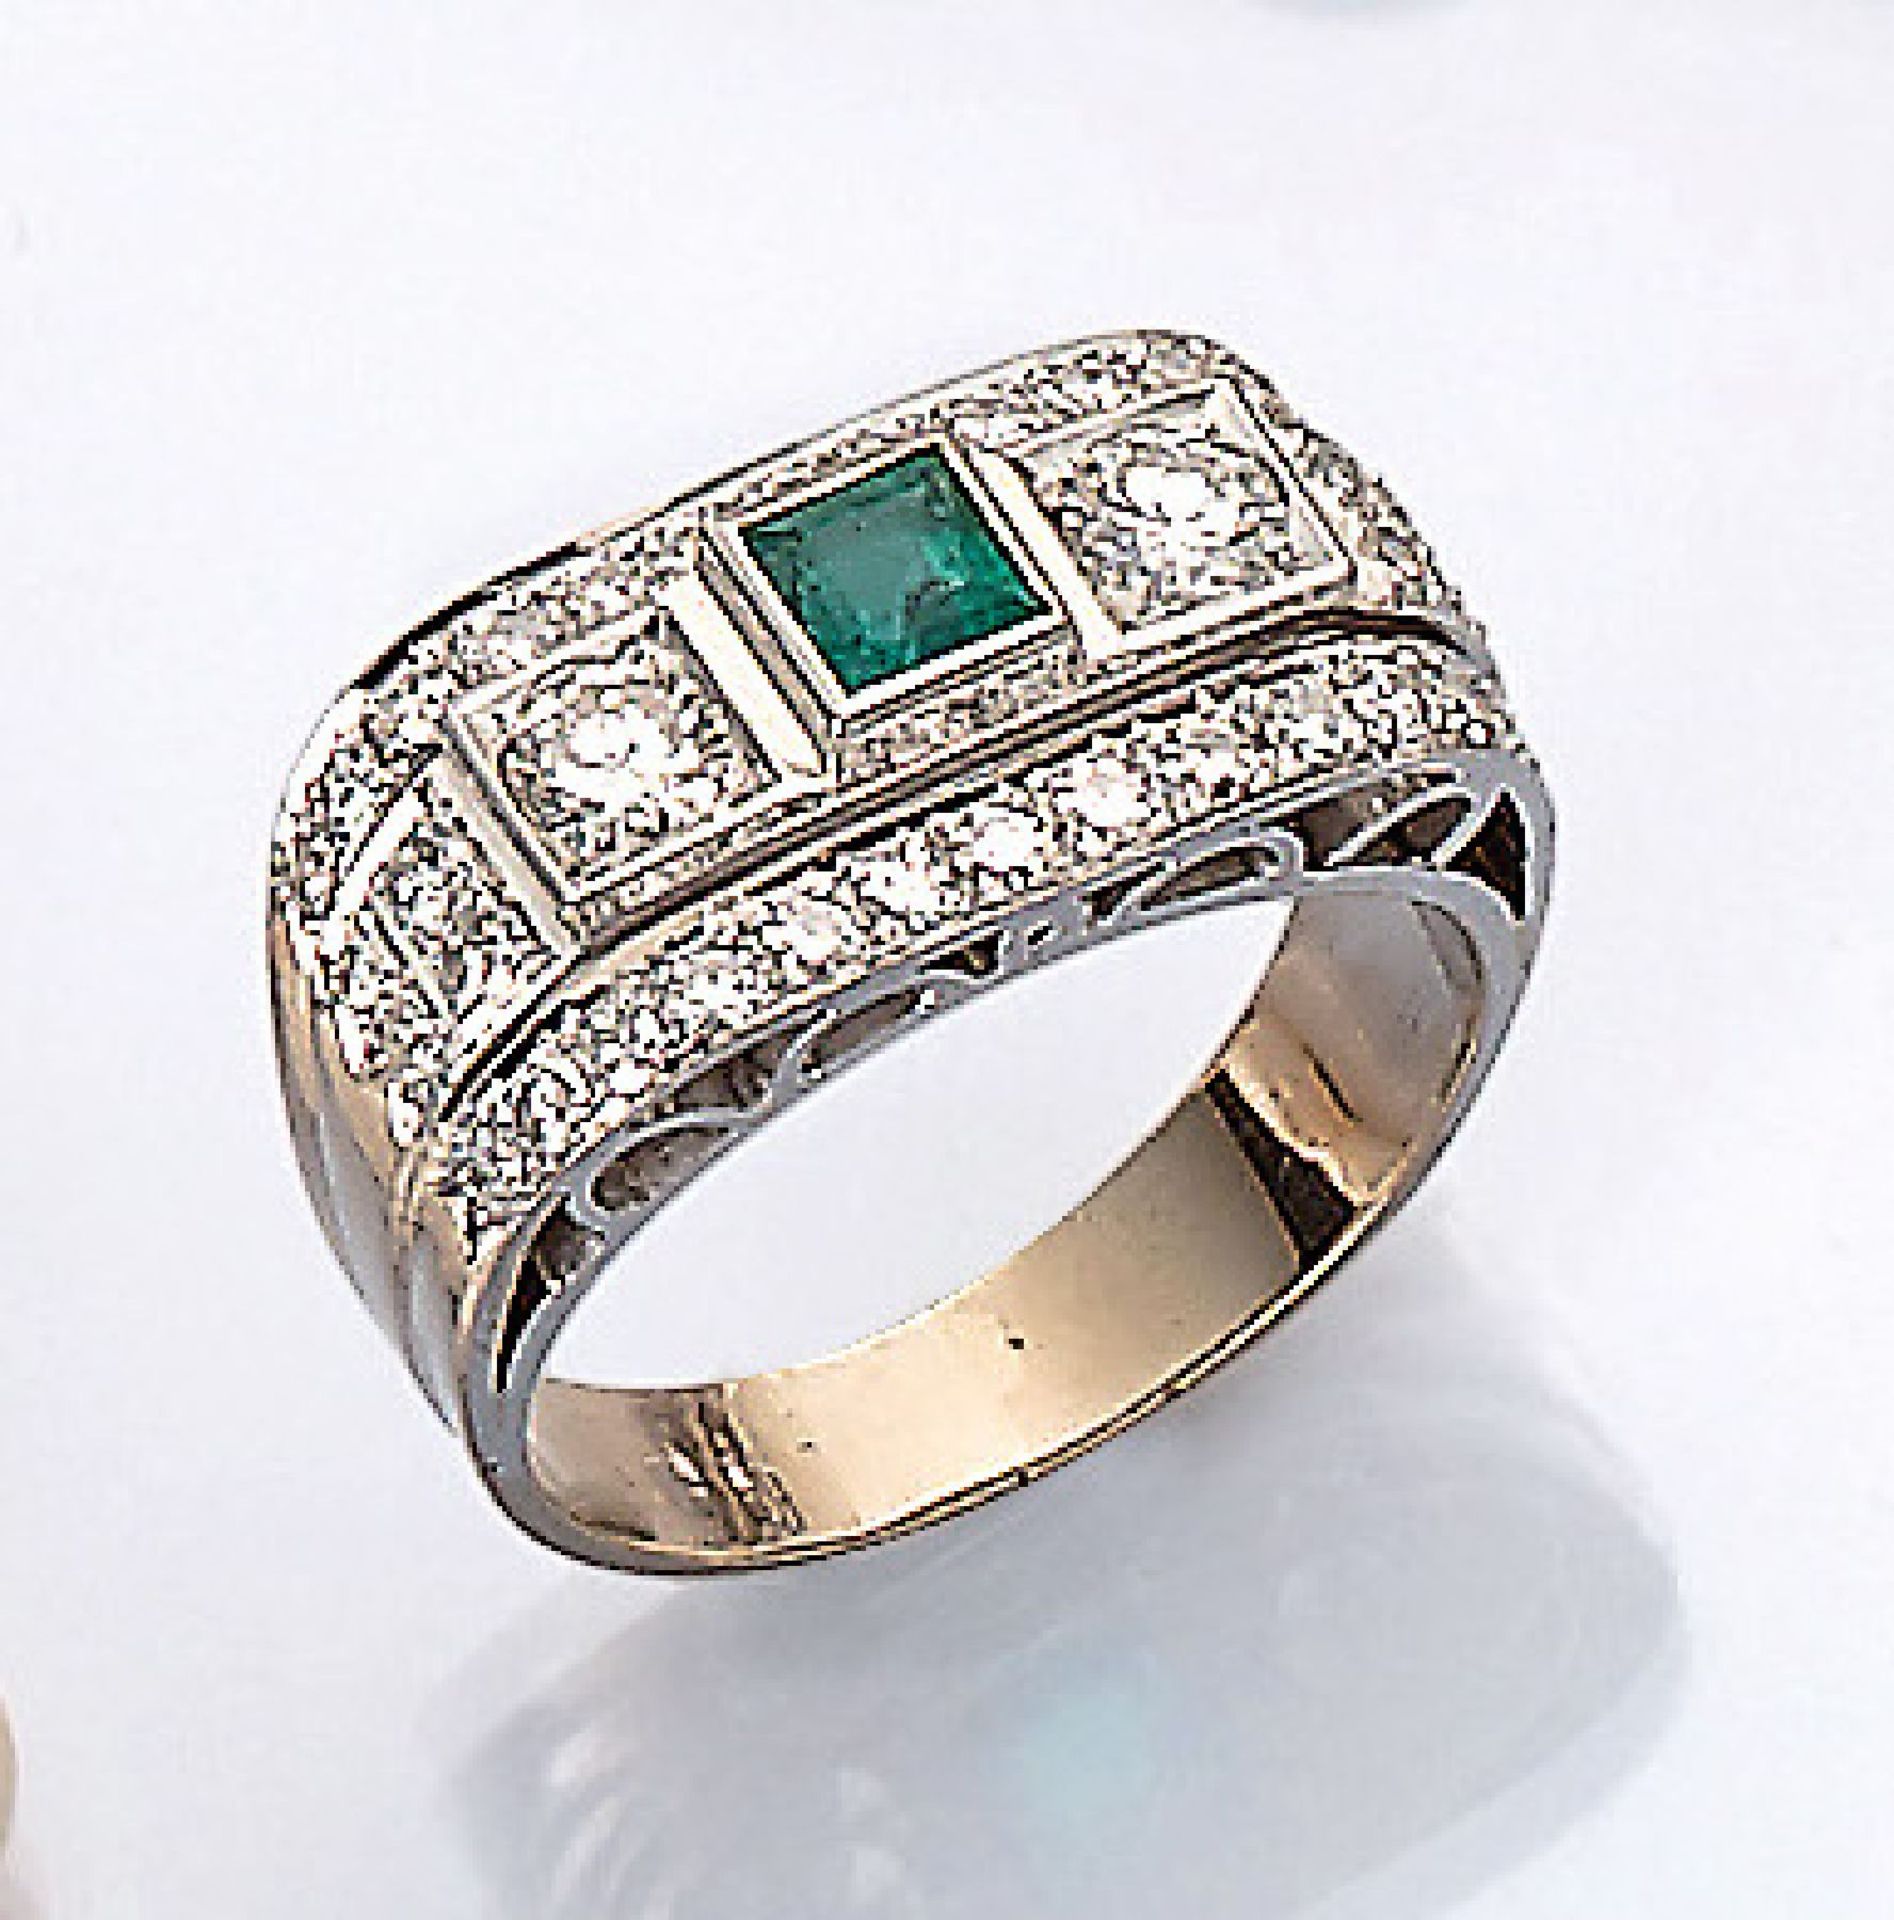 14 kt Gold Ring mit Smaragd und Diamanten, WG 750/000, 1 Smaragd-Carree ca. 0.30 ct, Diamanten